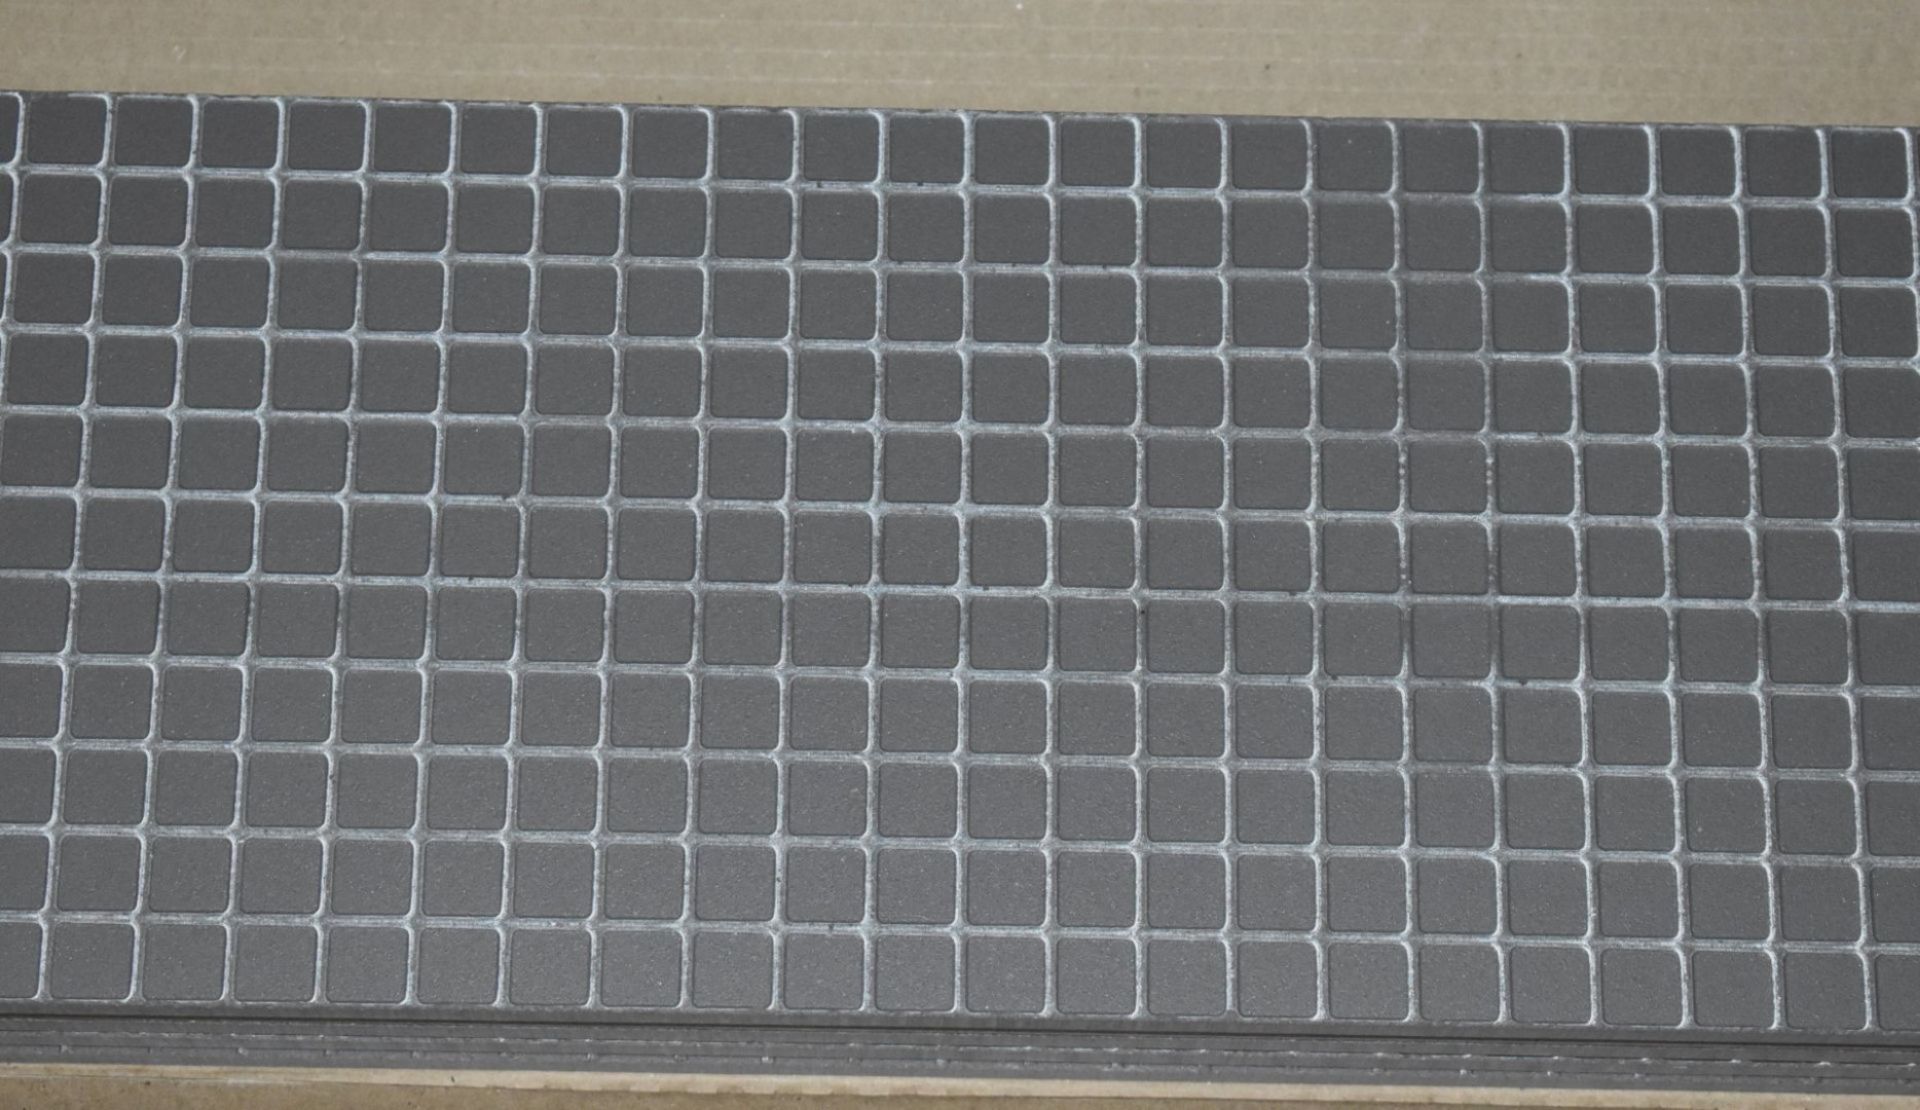 7 x Boxes of RAK Porcelain Floor or Wall Tiles - M Project Wood Design in Dark Grey - 19.5 x 120 cm - Image 6 of 11